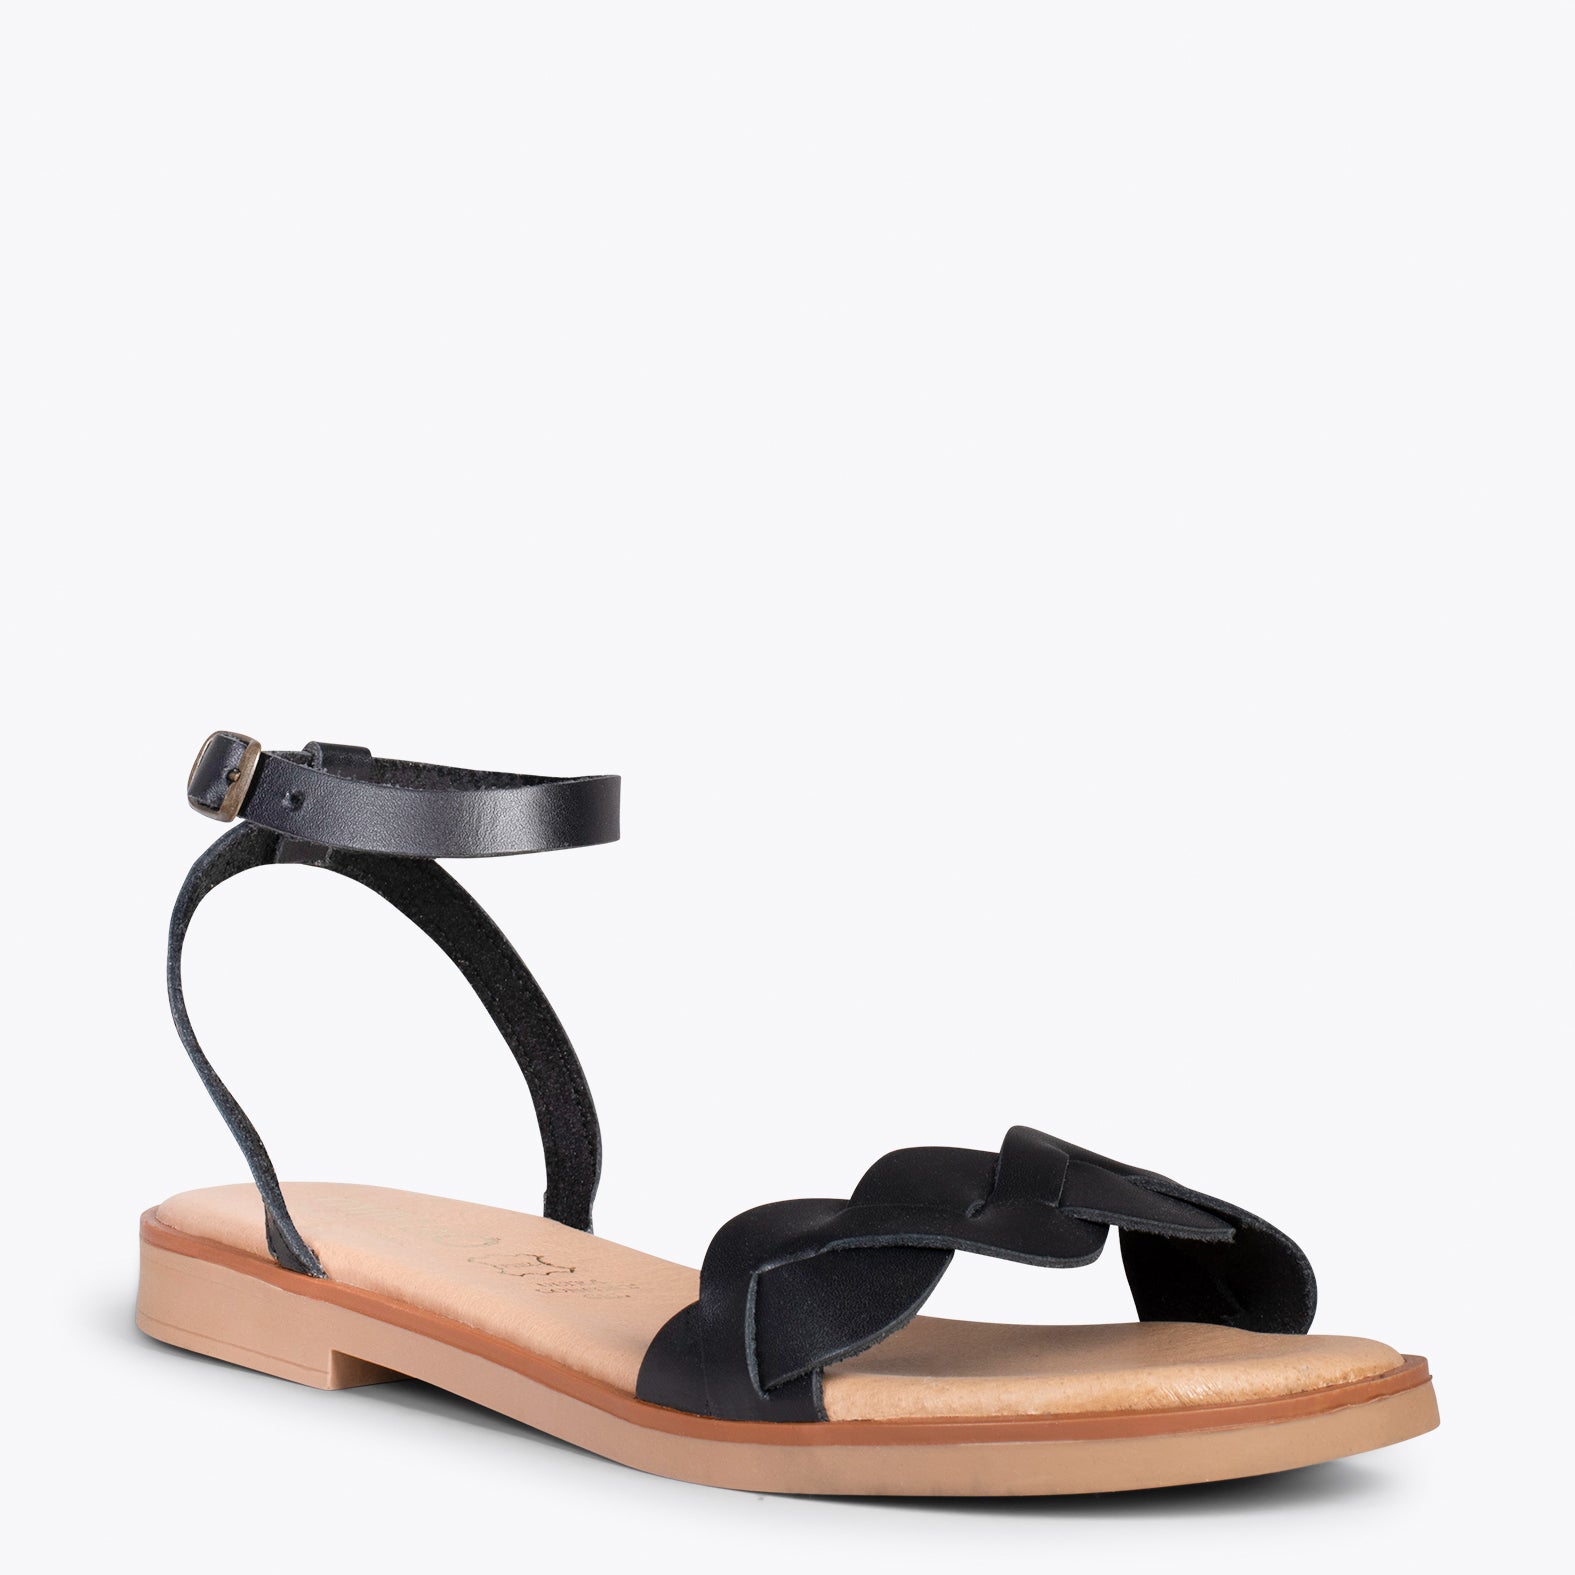 ARECA – BLACK flat sandal with braided upper